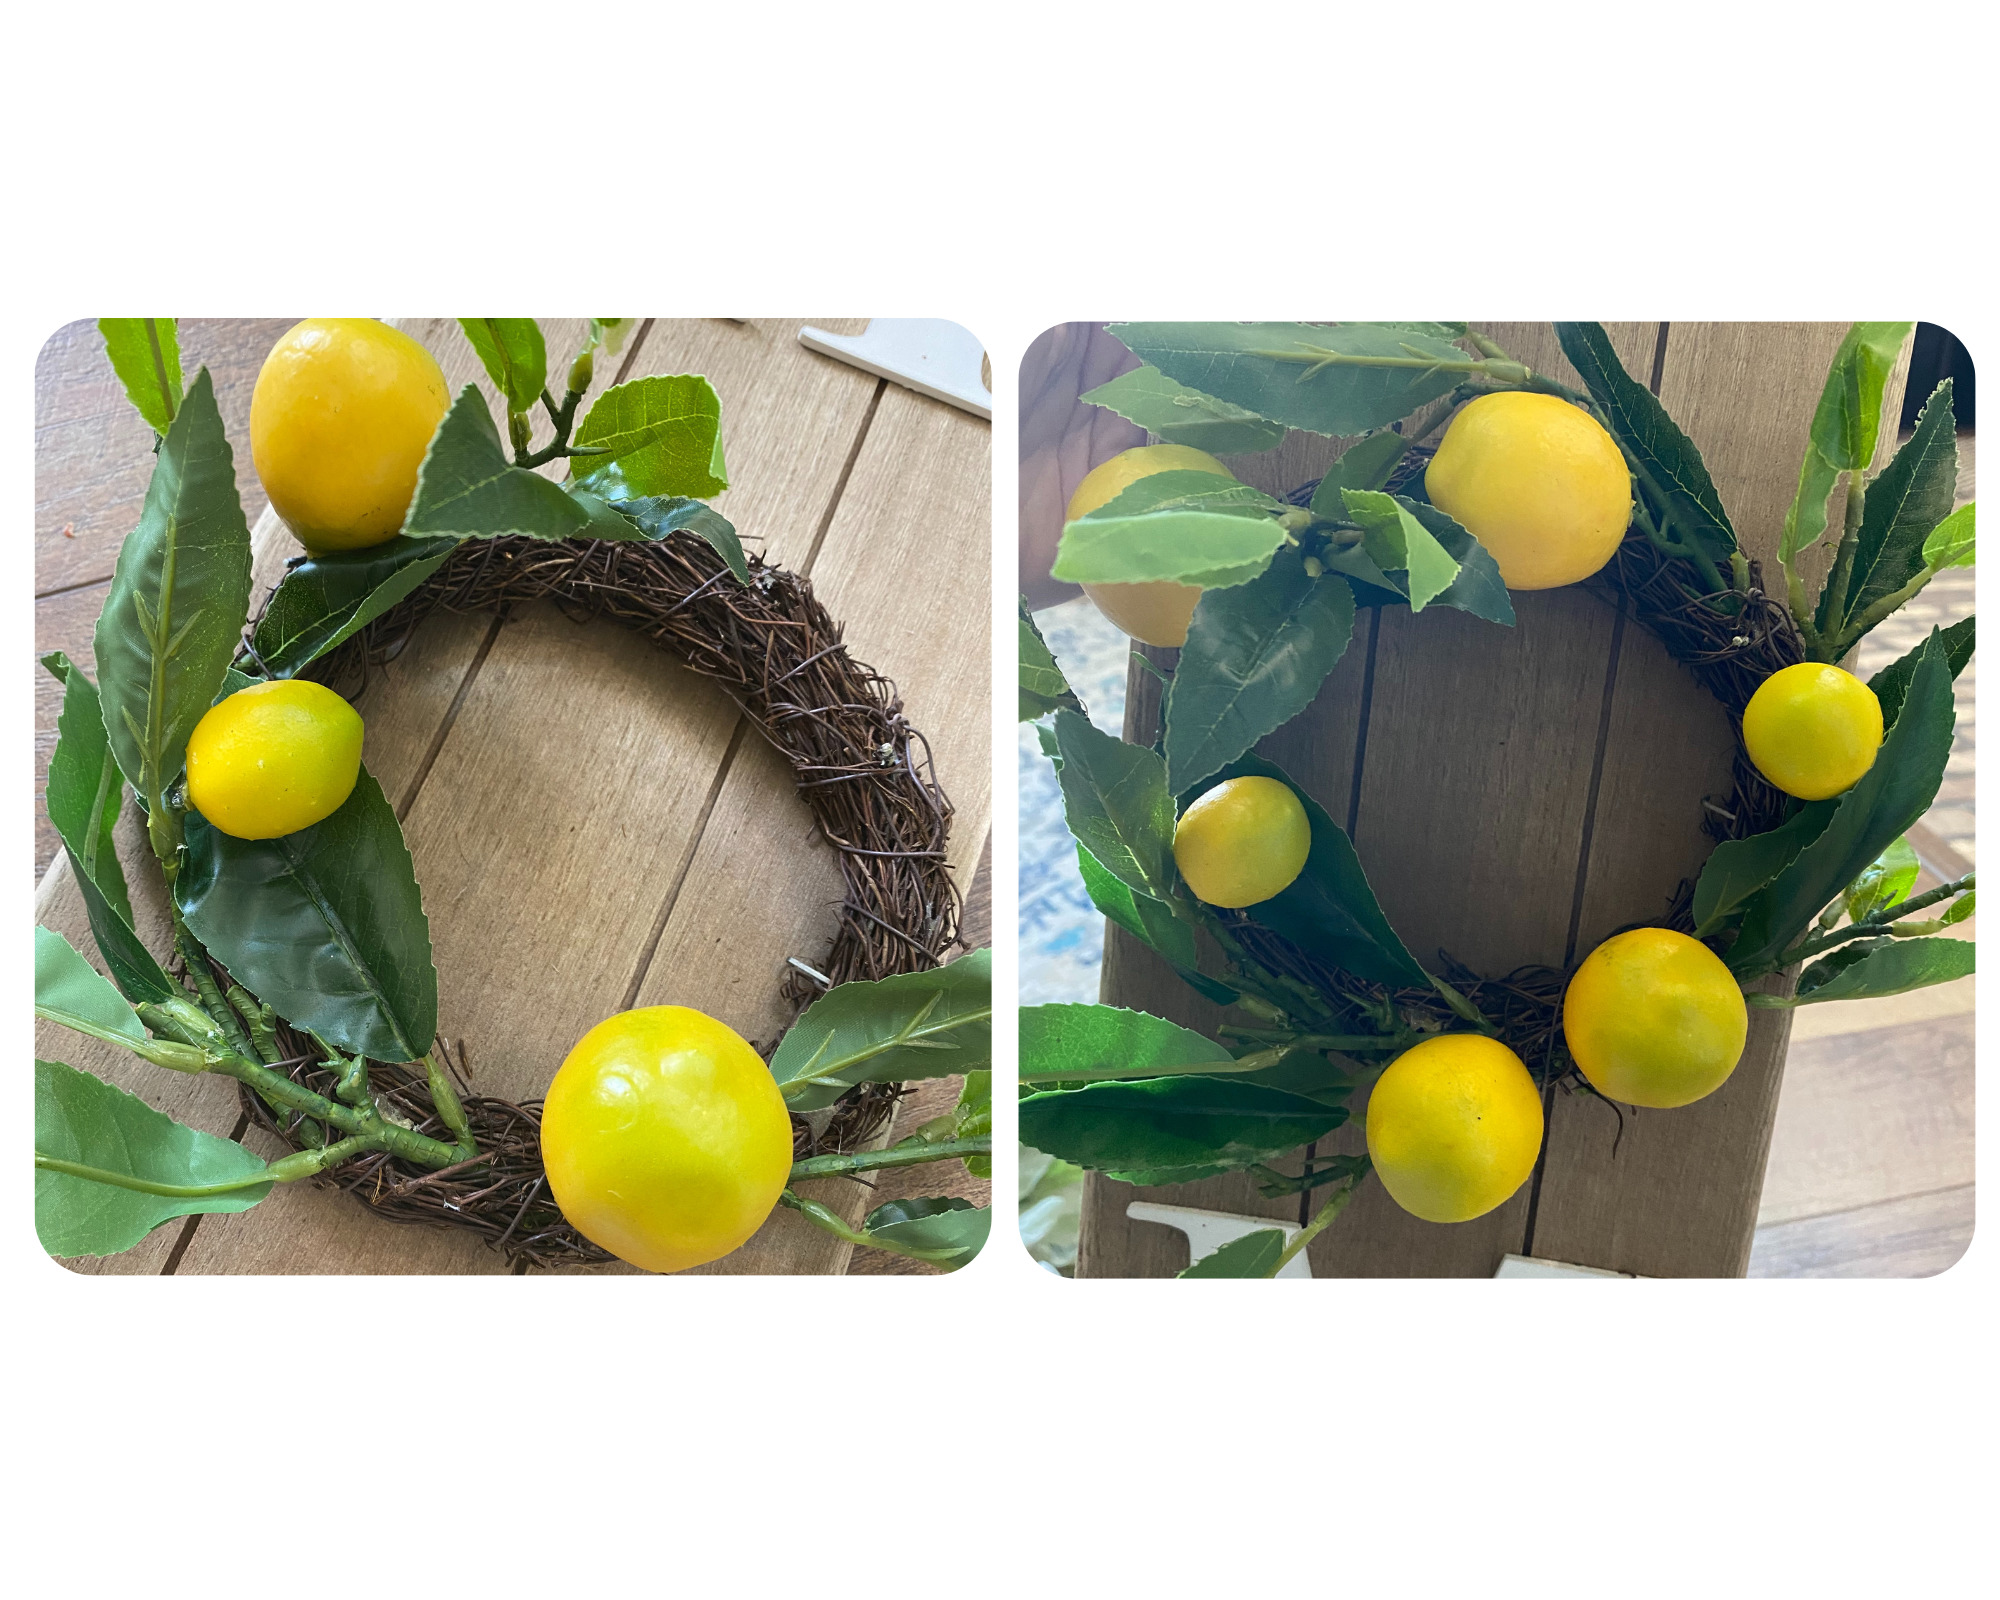 adding lemons onto big lot's welcome sign wreath